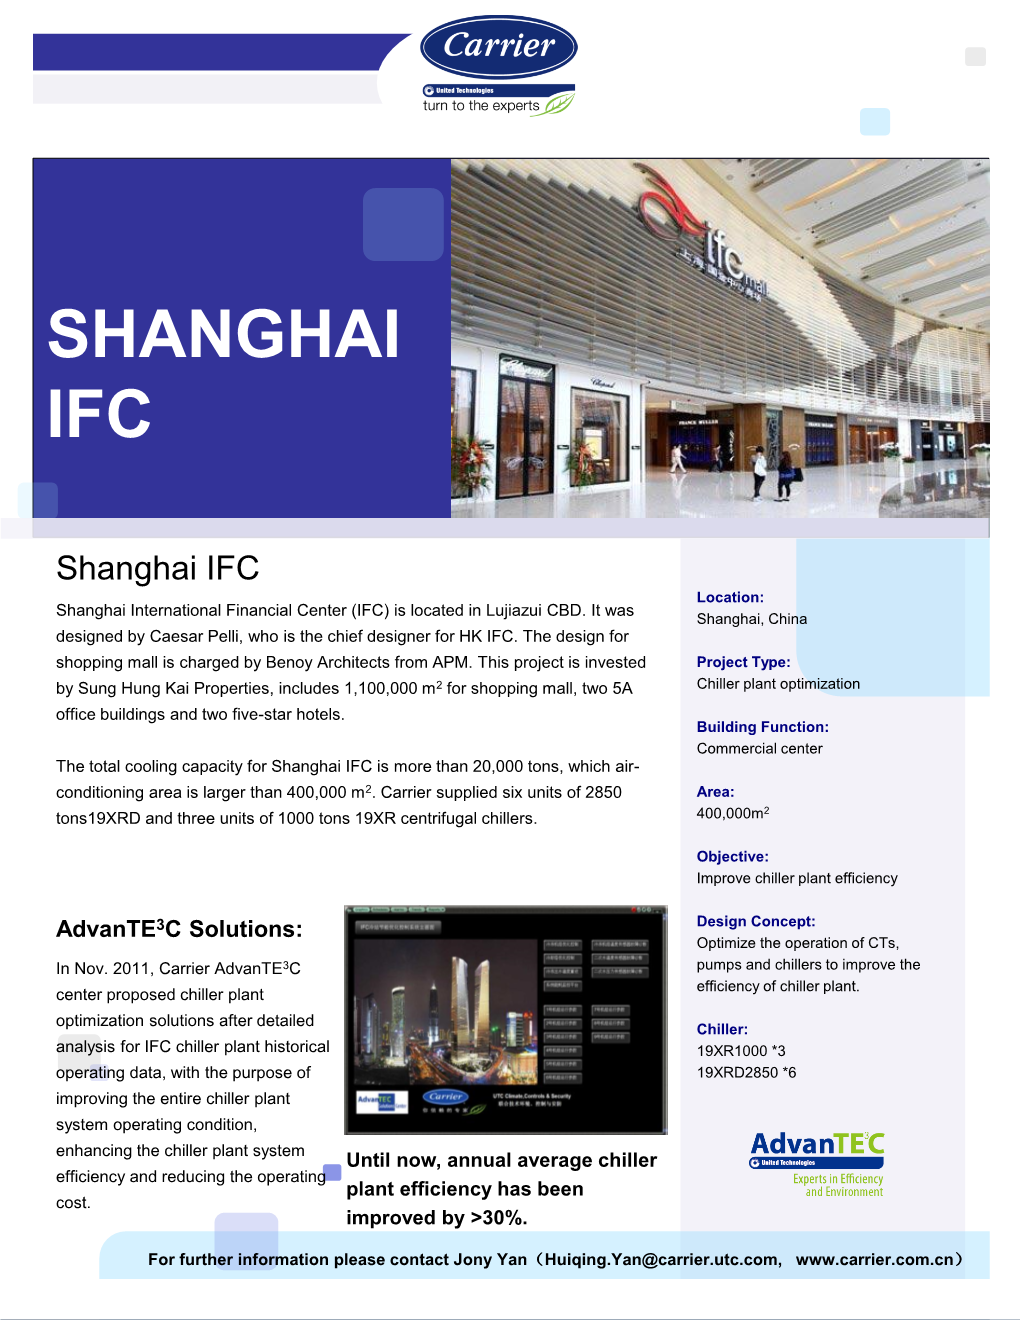 Shanghai IFC Case Study